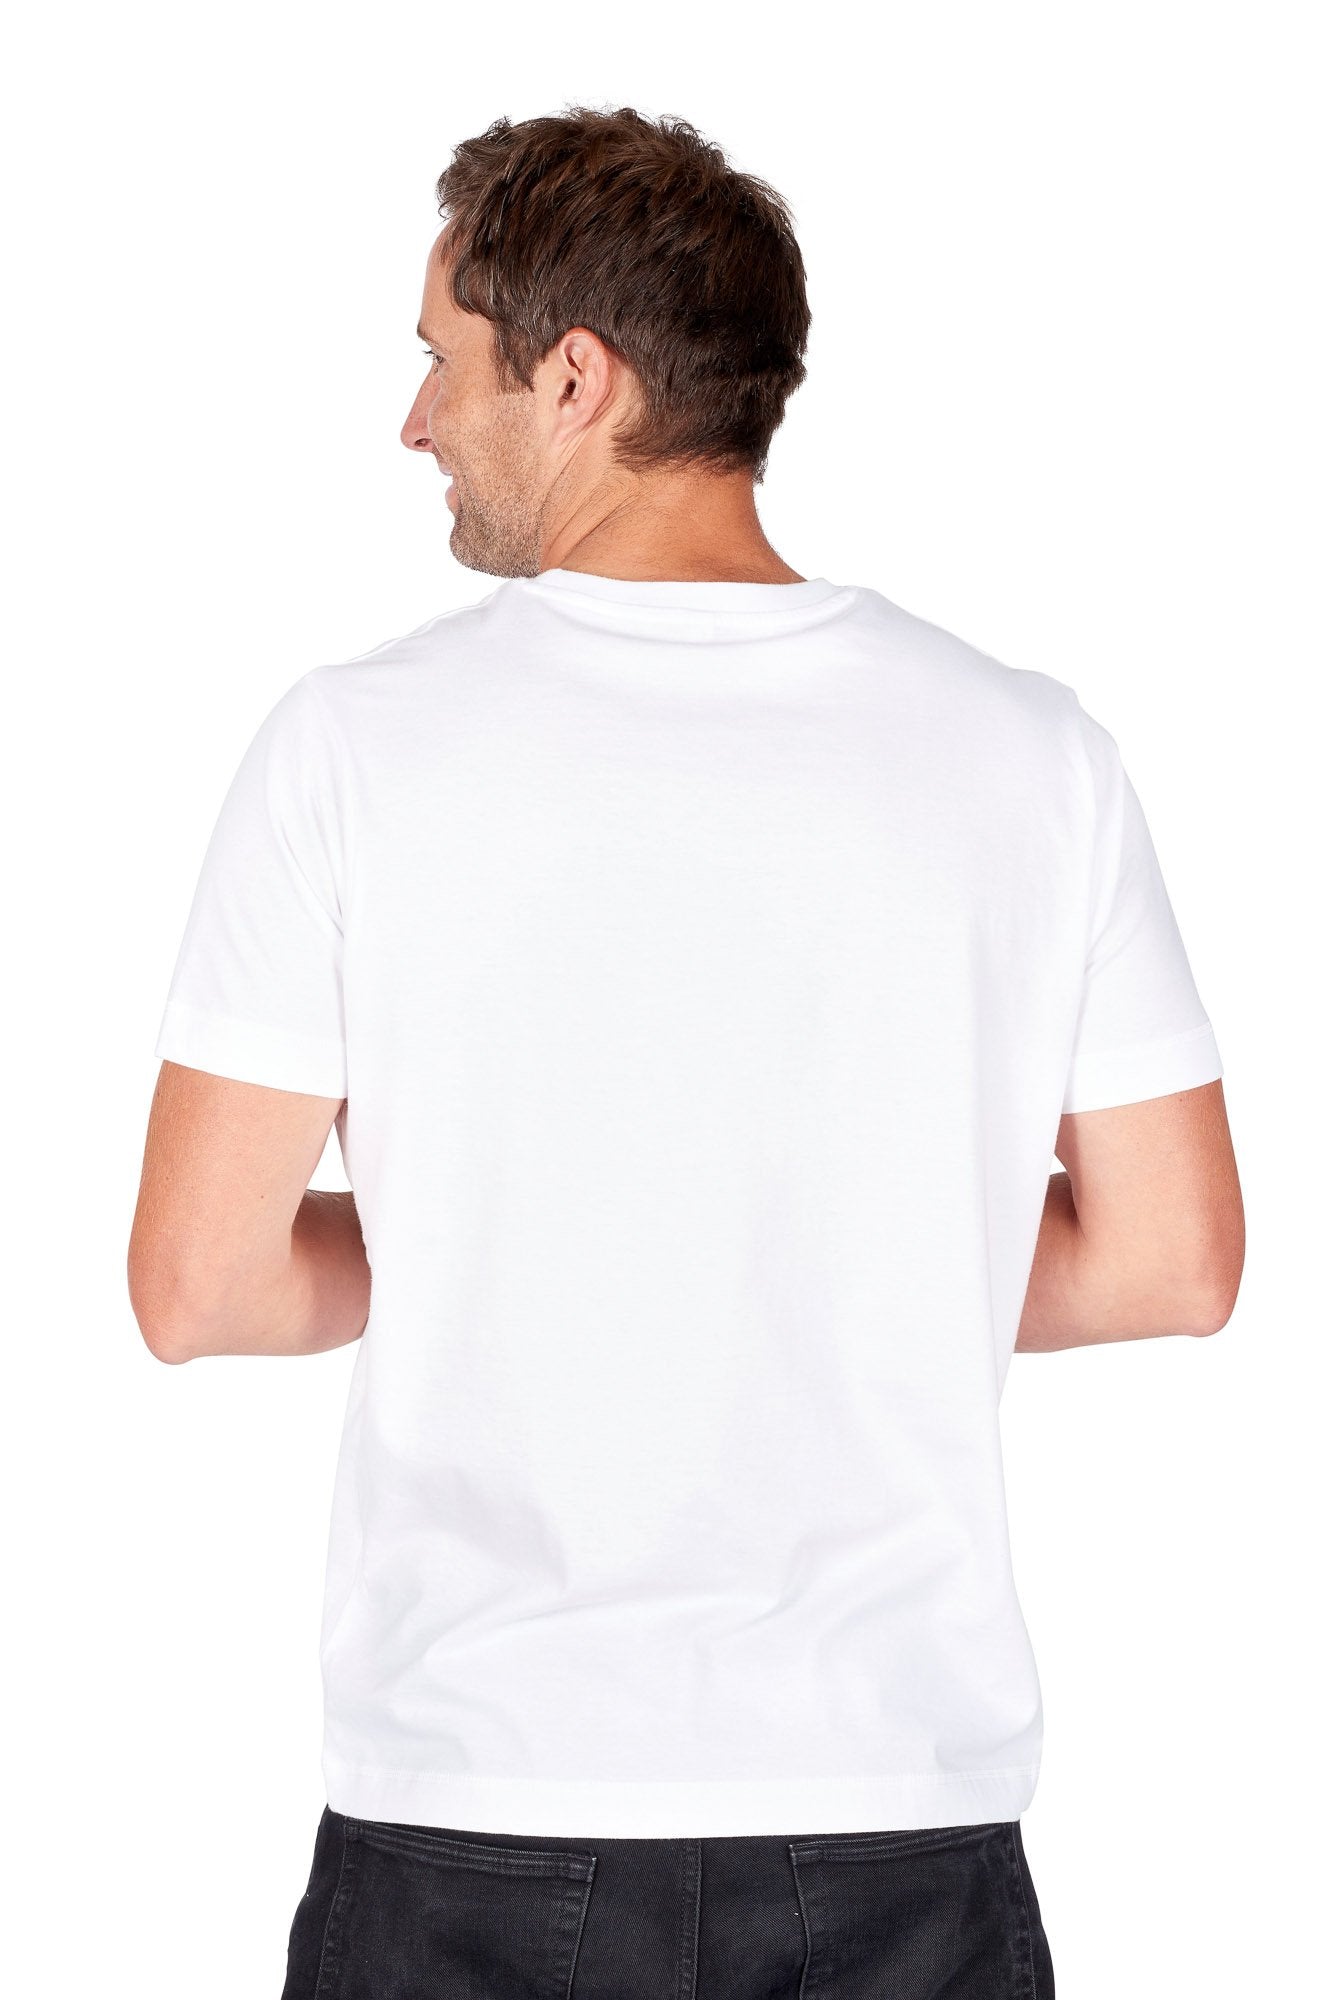 Men's Mental Health Matters T-Shirt - White